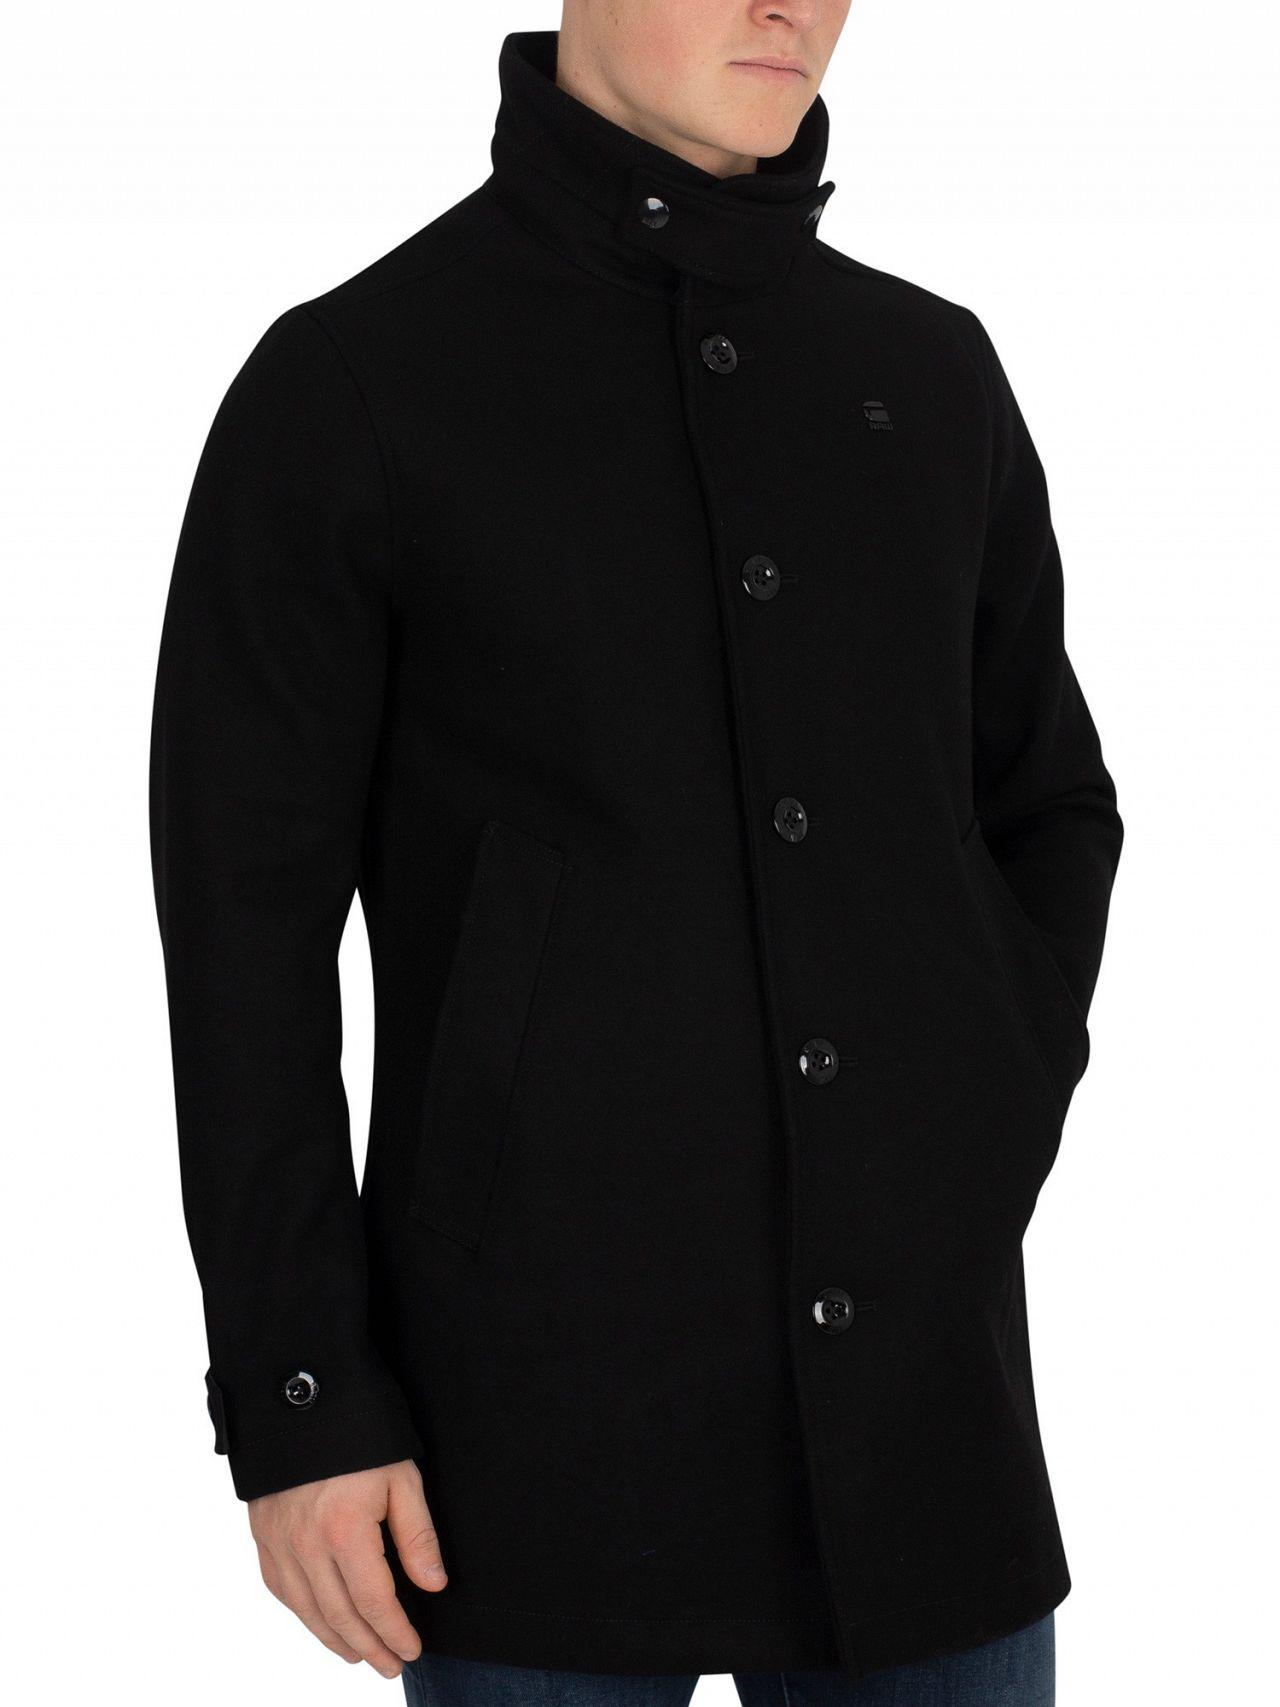 G-Star RAW Dark Black Garber Empral Wool Trench Coat for Men - Lyst